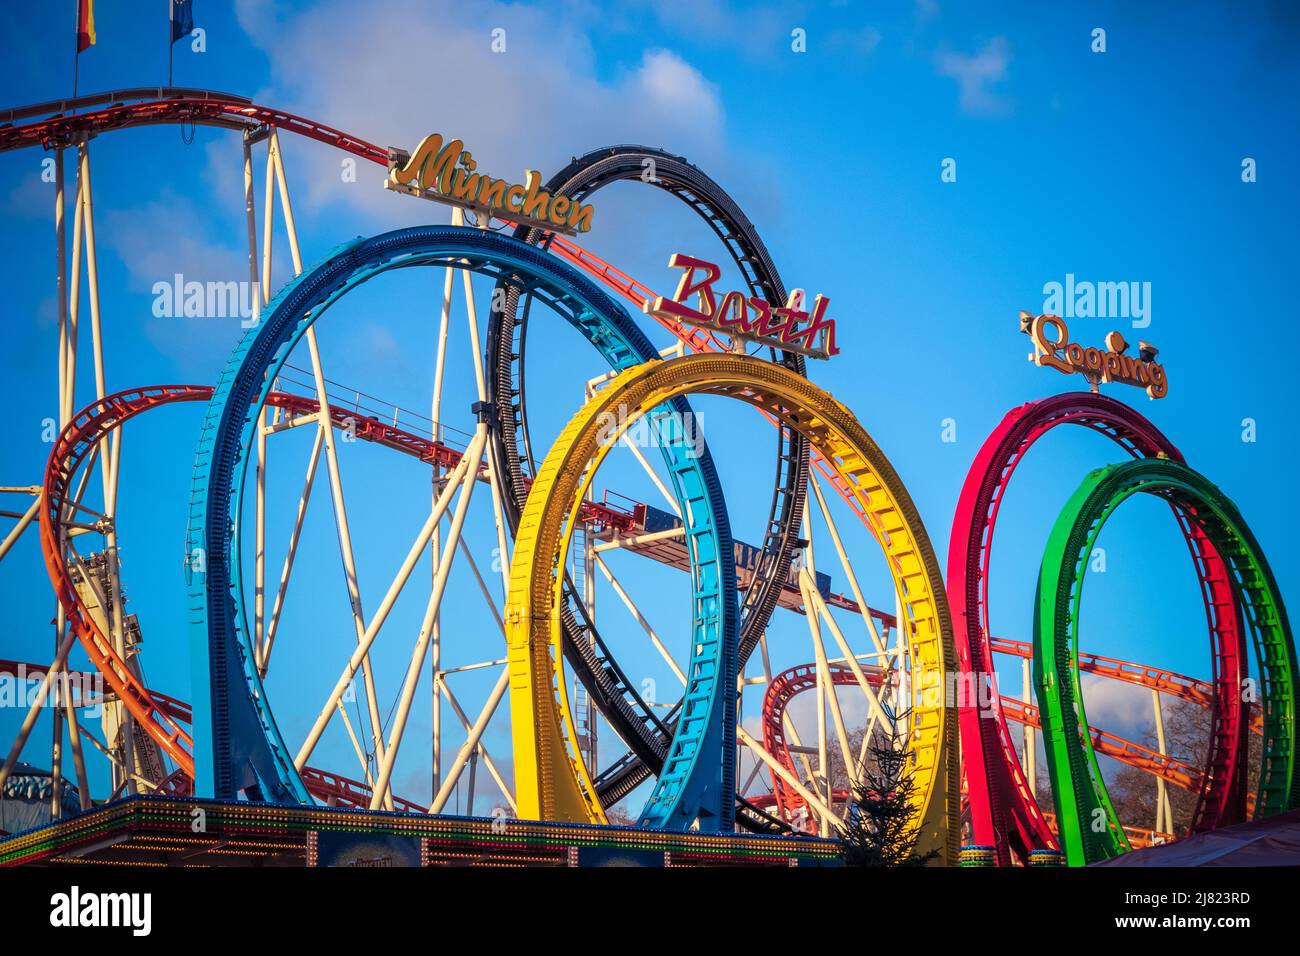 Munich Looping, an amusement ride at Christmas funfair Hyde Park Winter Wonderland in London Stock Photo